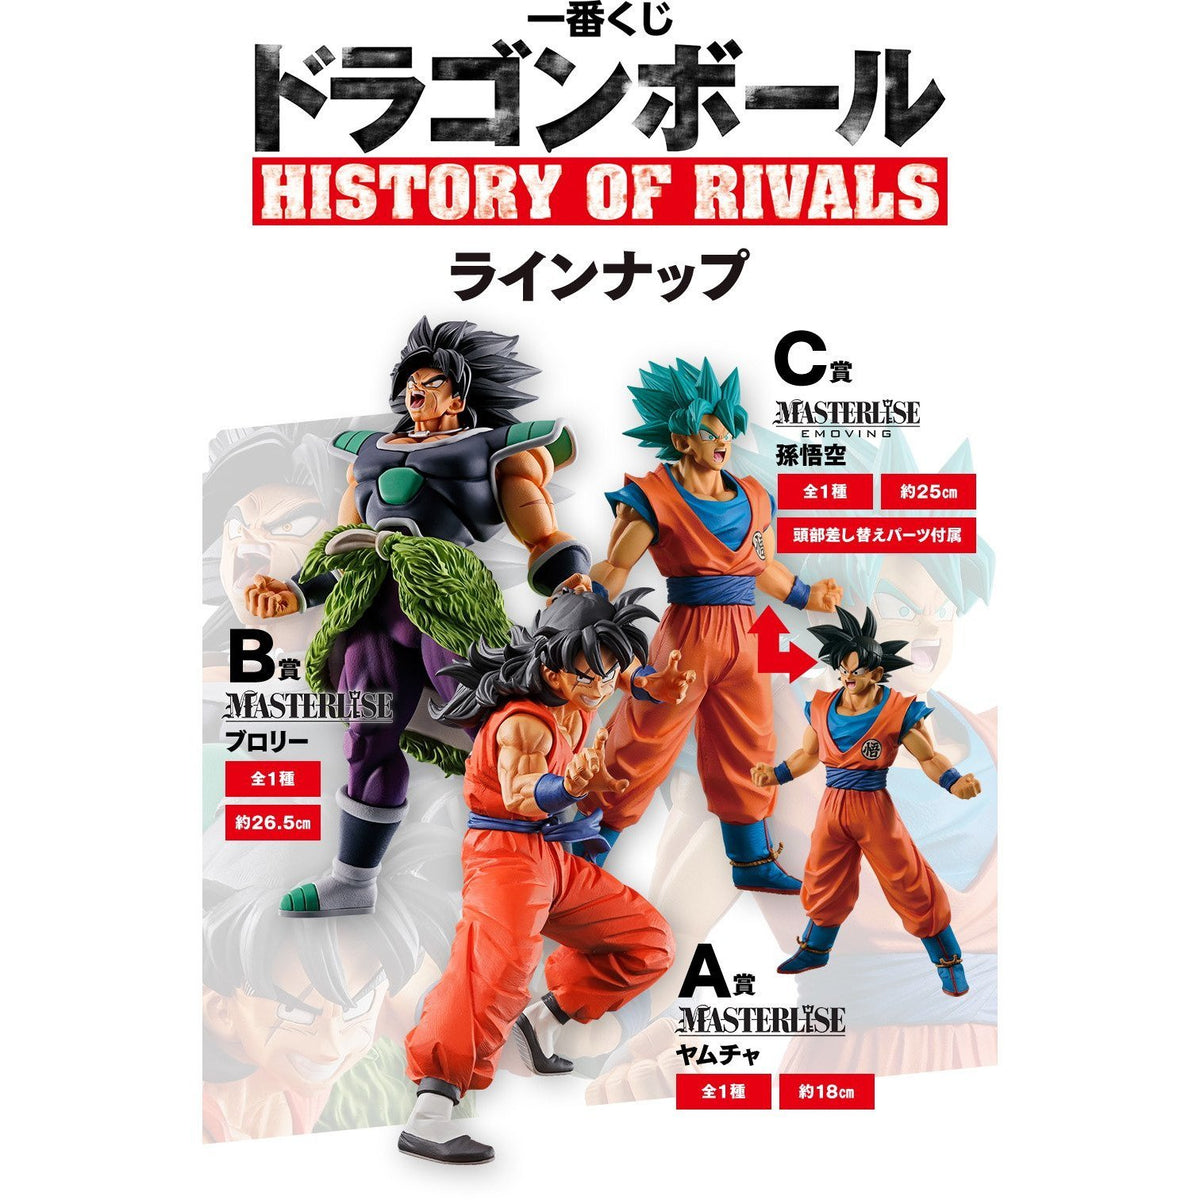 Ichiban Kuji Dragon Ball &quot;History of Rivals&quot;-Bandai-Ace Cards &amp; Collectibles